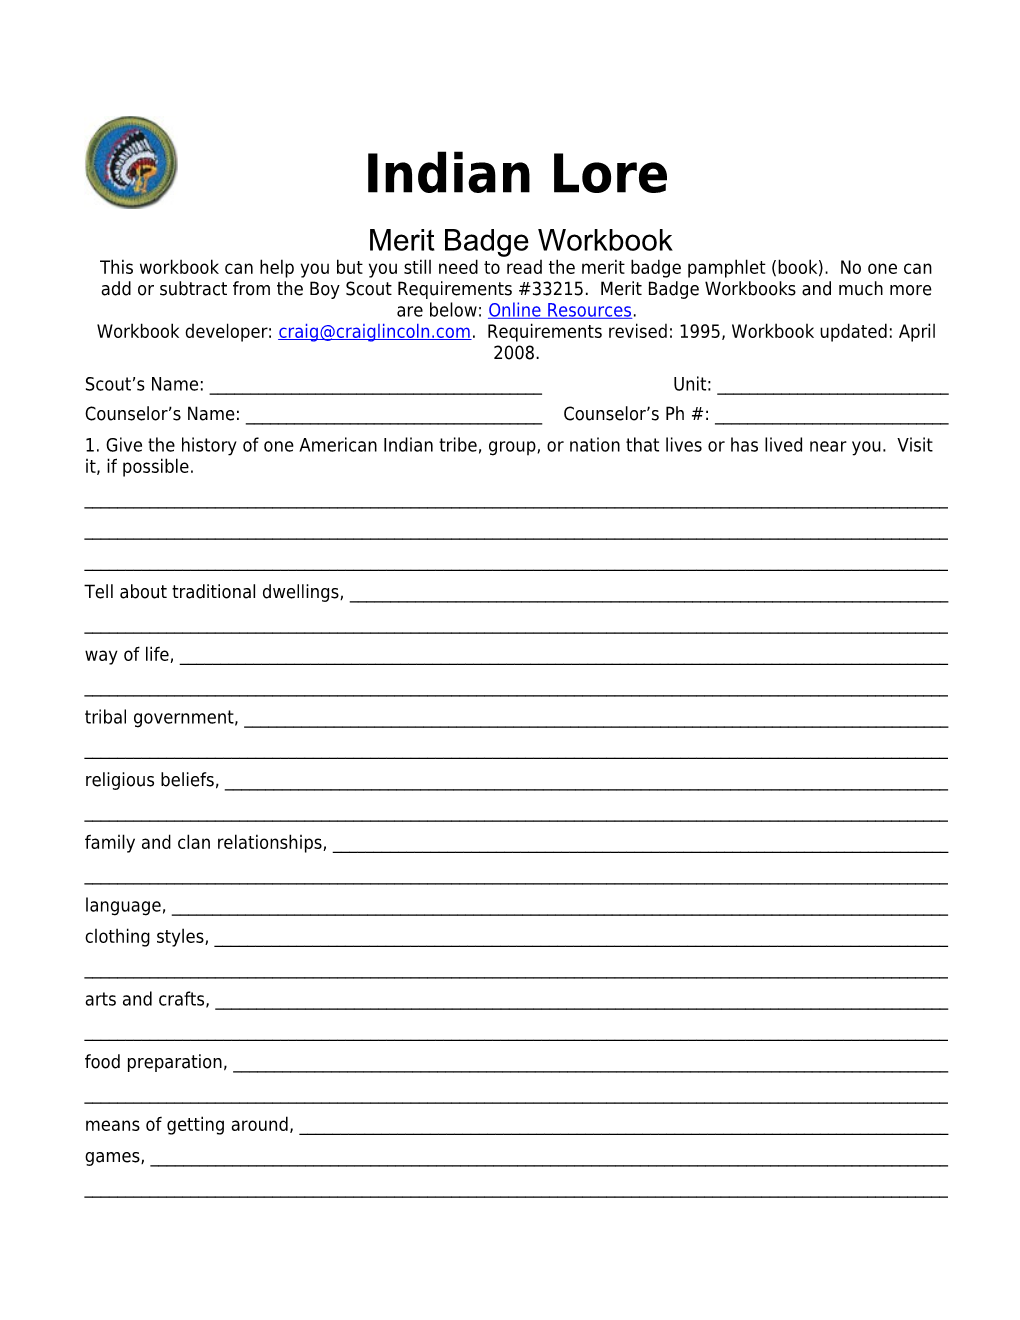 Indian Lore P. 5 Merit Badge Workbook Scout's Name: ______